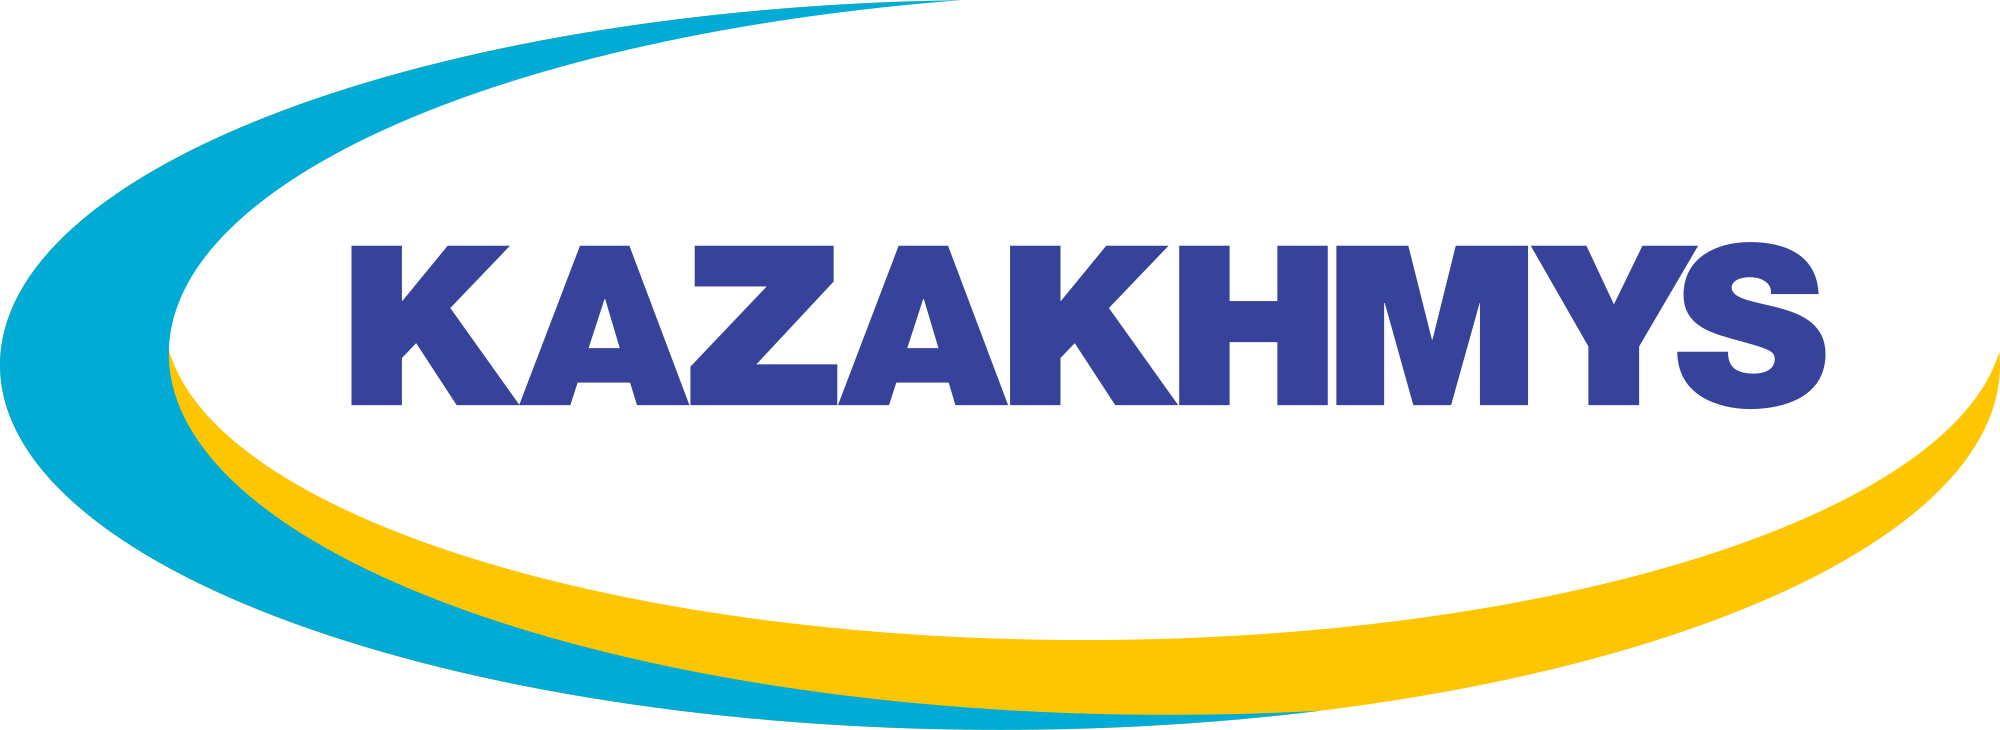 Kazakhmys